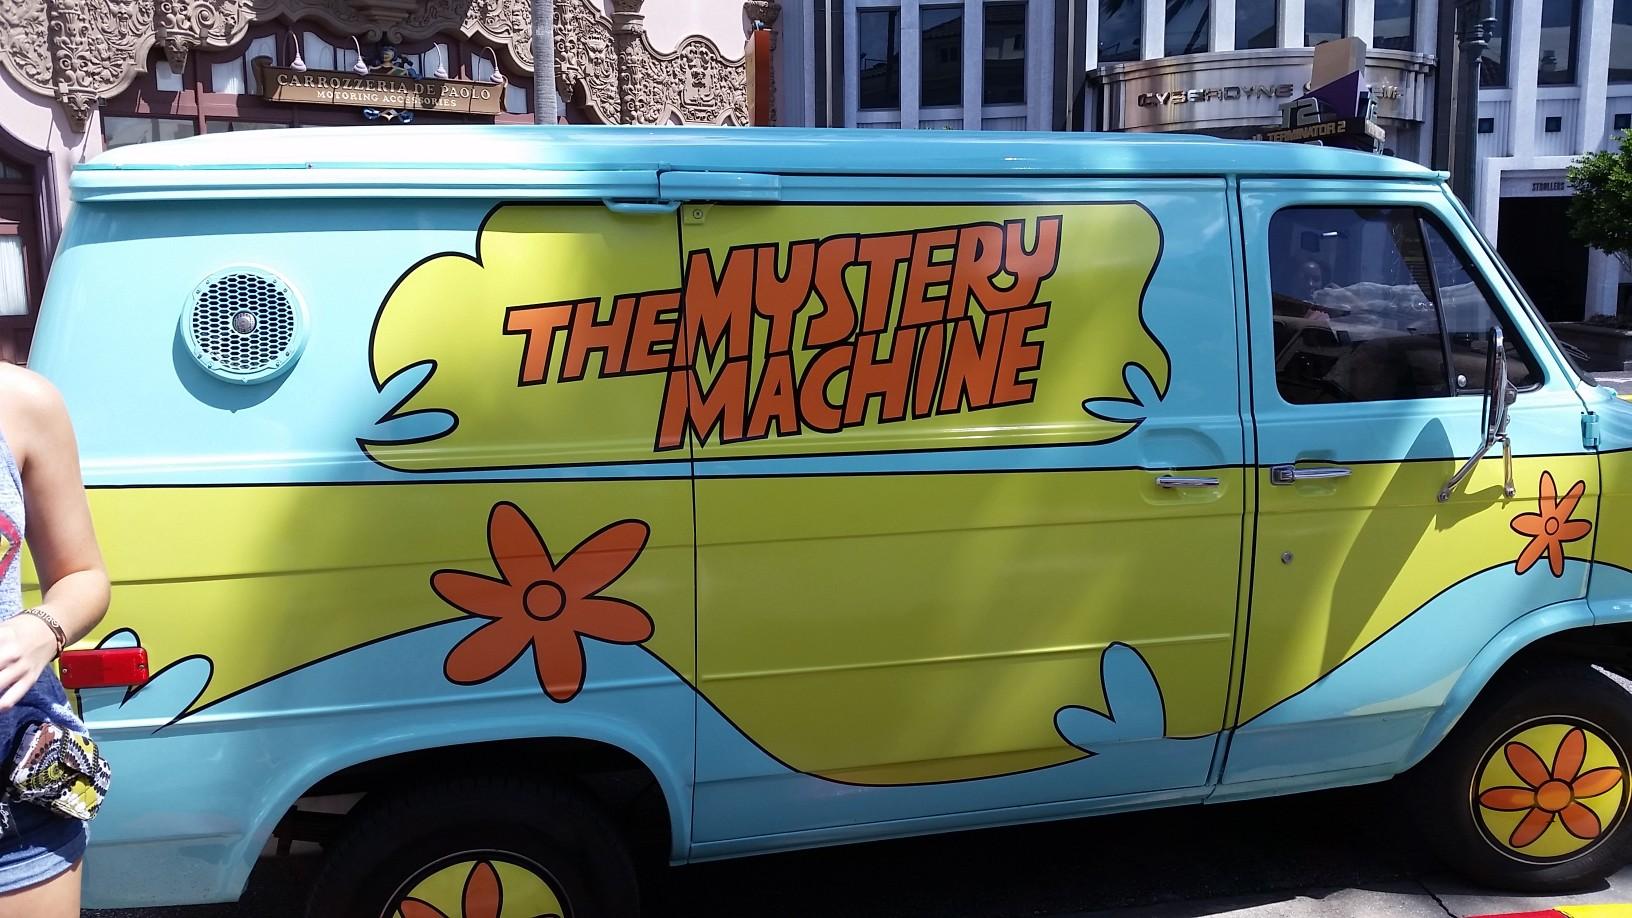 A Mystery Machine replica at Universal Studios in Orlando, Florida.